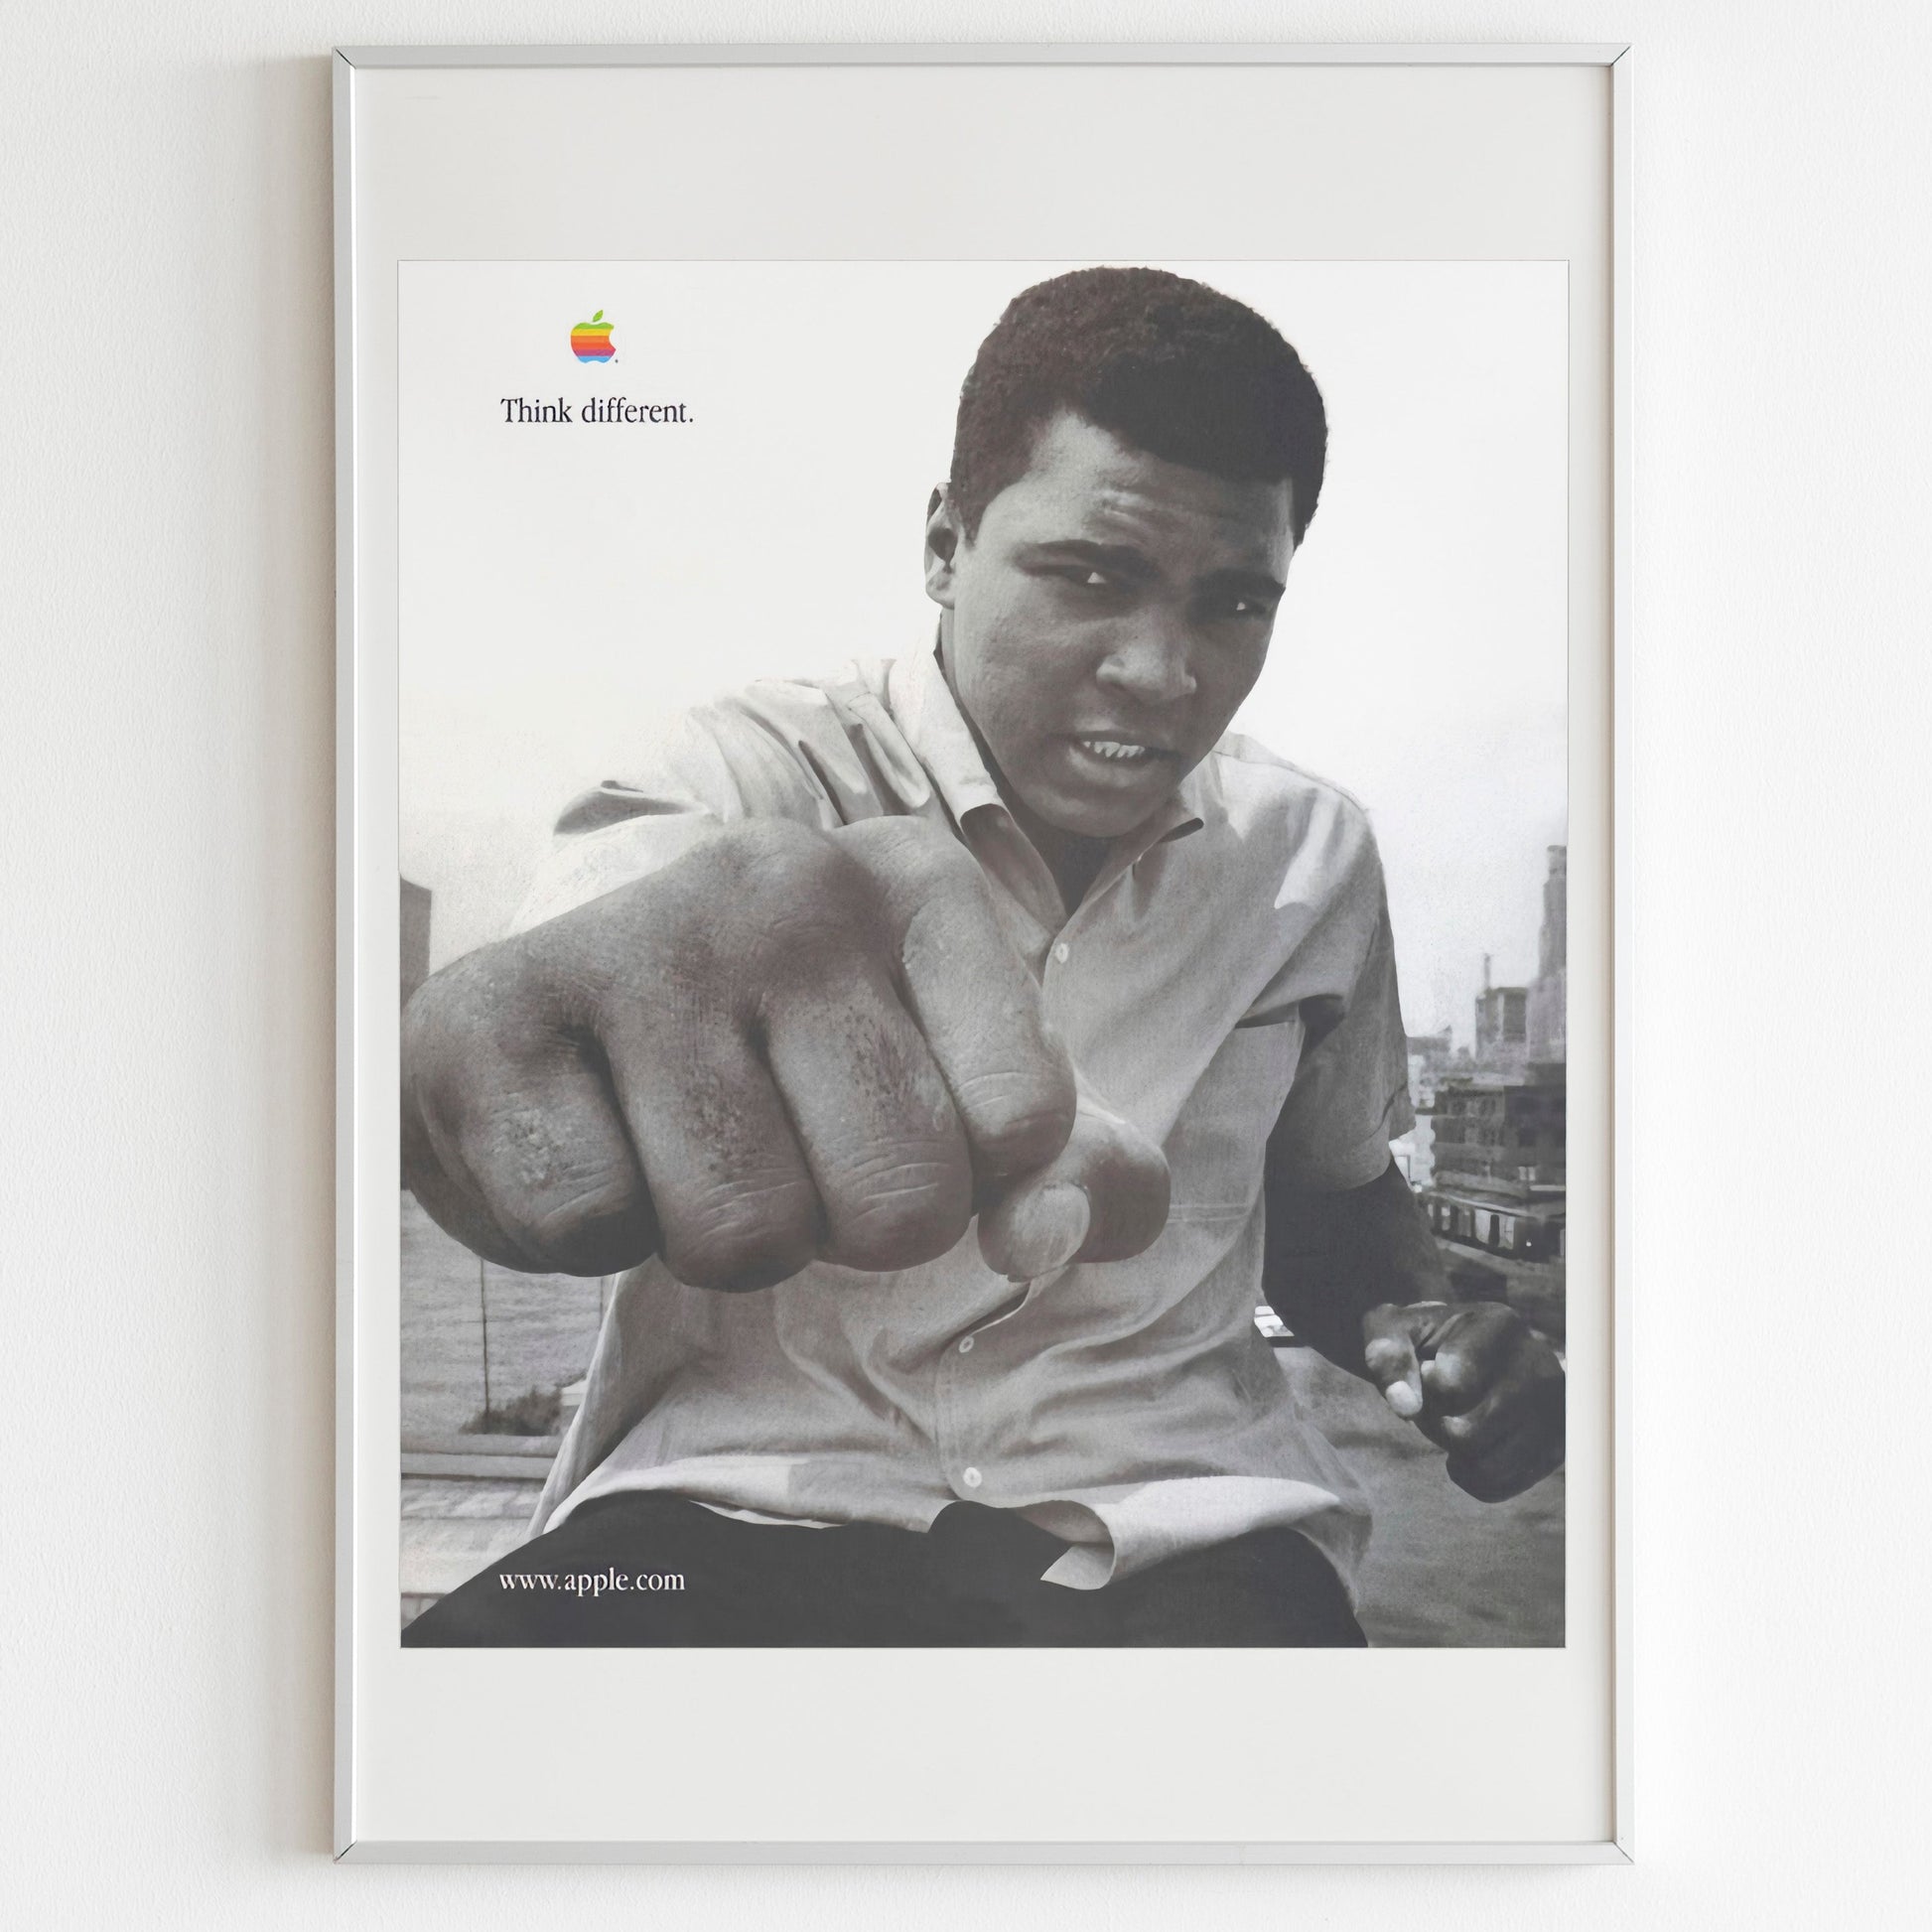 Apple Muhammad Ali "Think Different" Advertising Poster, 90s Retro Style Print, Vintage Wall Art, Magazine Retro Advertisement